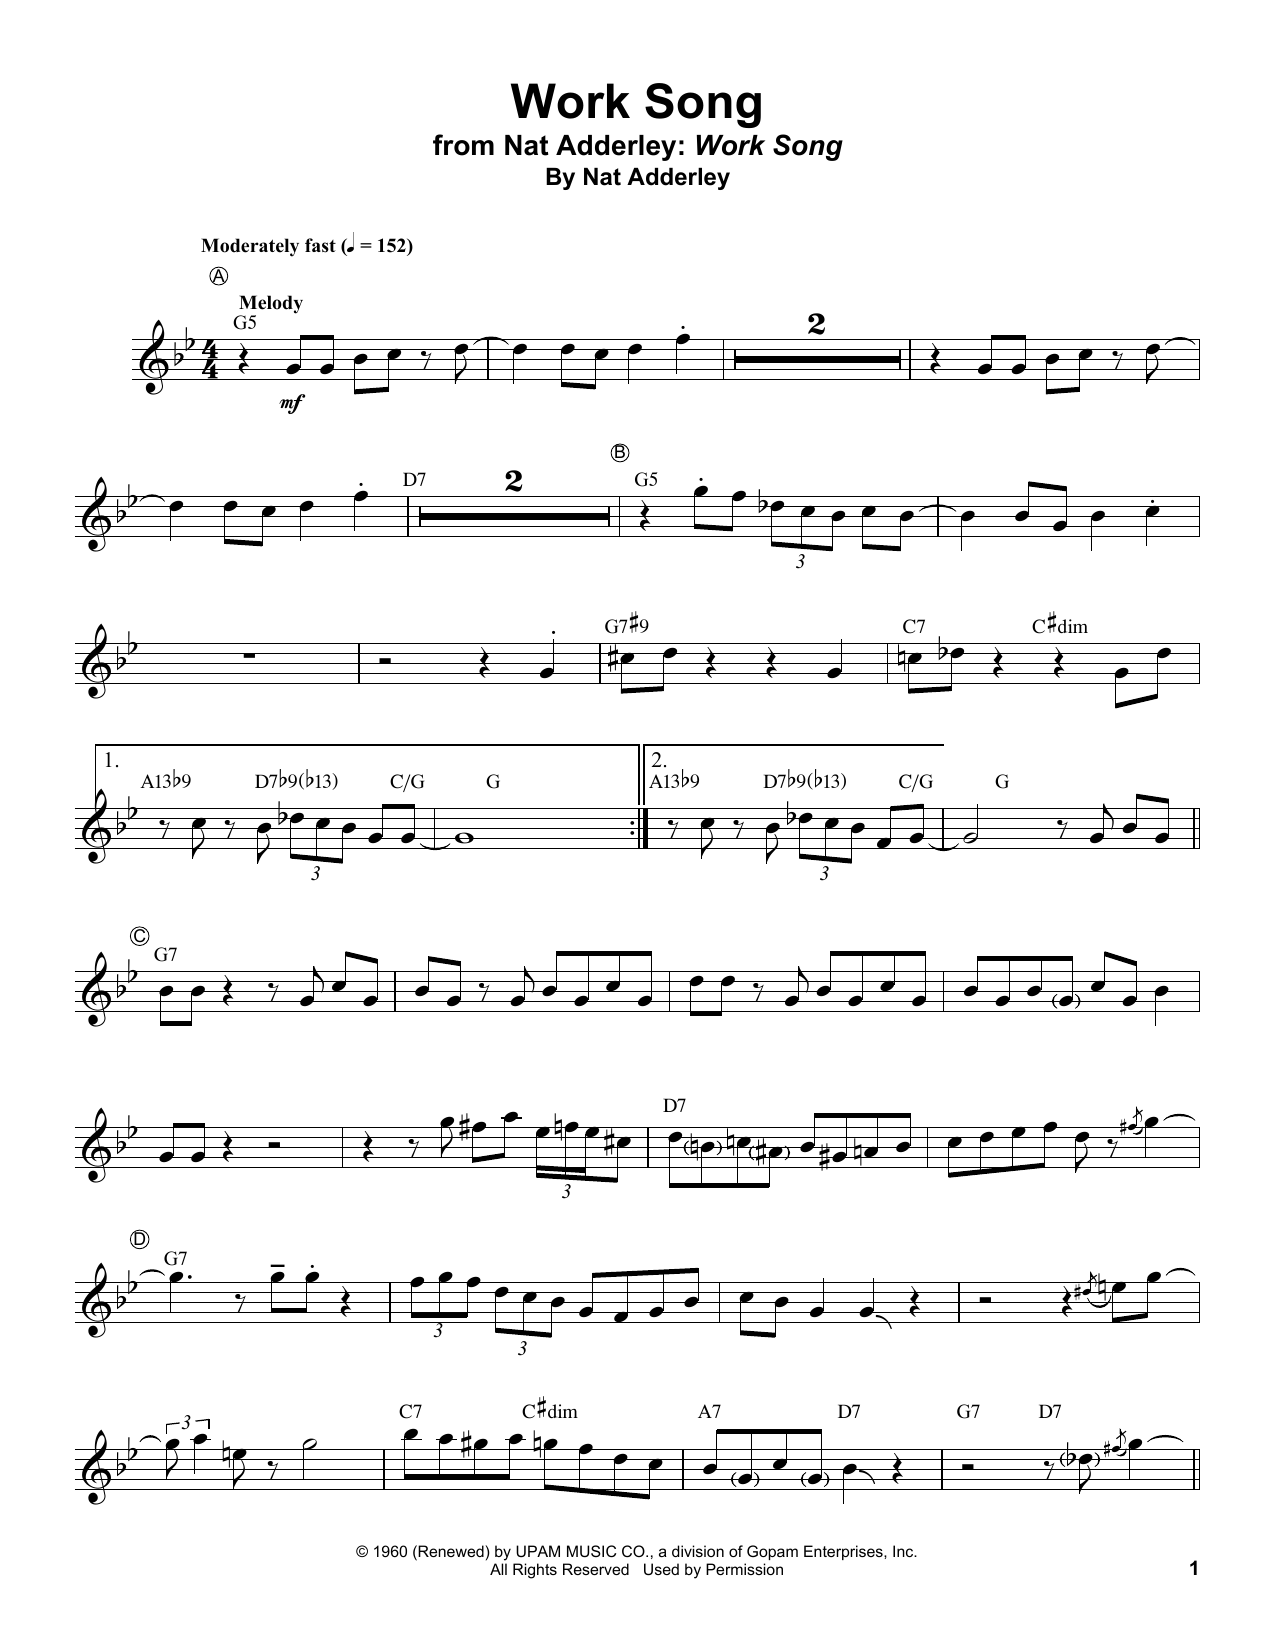 Nat Adderley Work Song Sheet Music Notes & Chords for Trumpet Transcription - Download or Print PDF